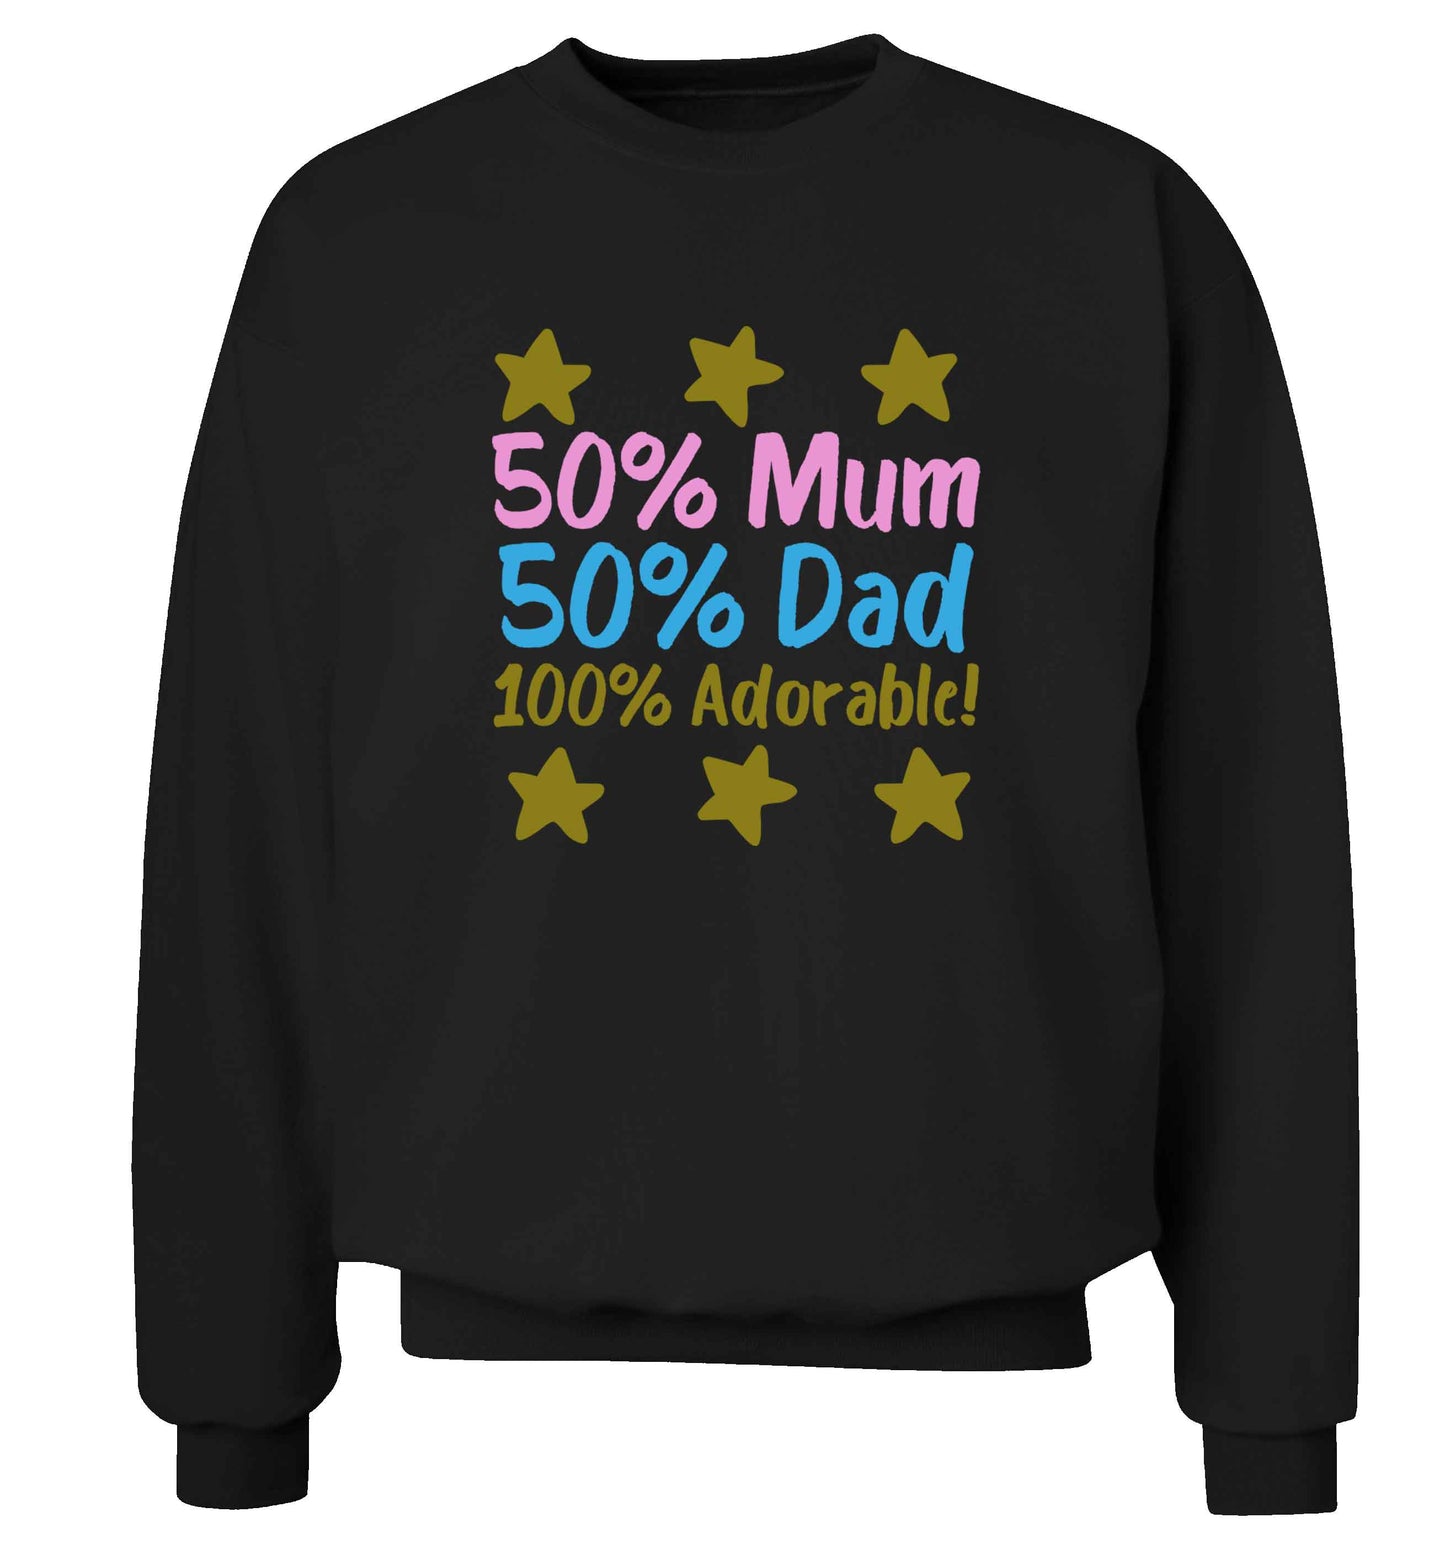 50% mum 50% dad 100% adorable adult's unisex black sweater 2XL